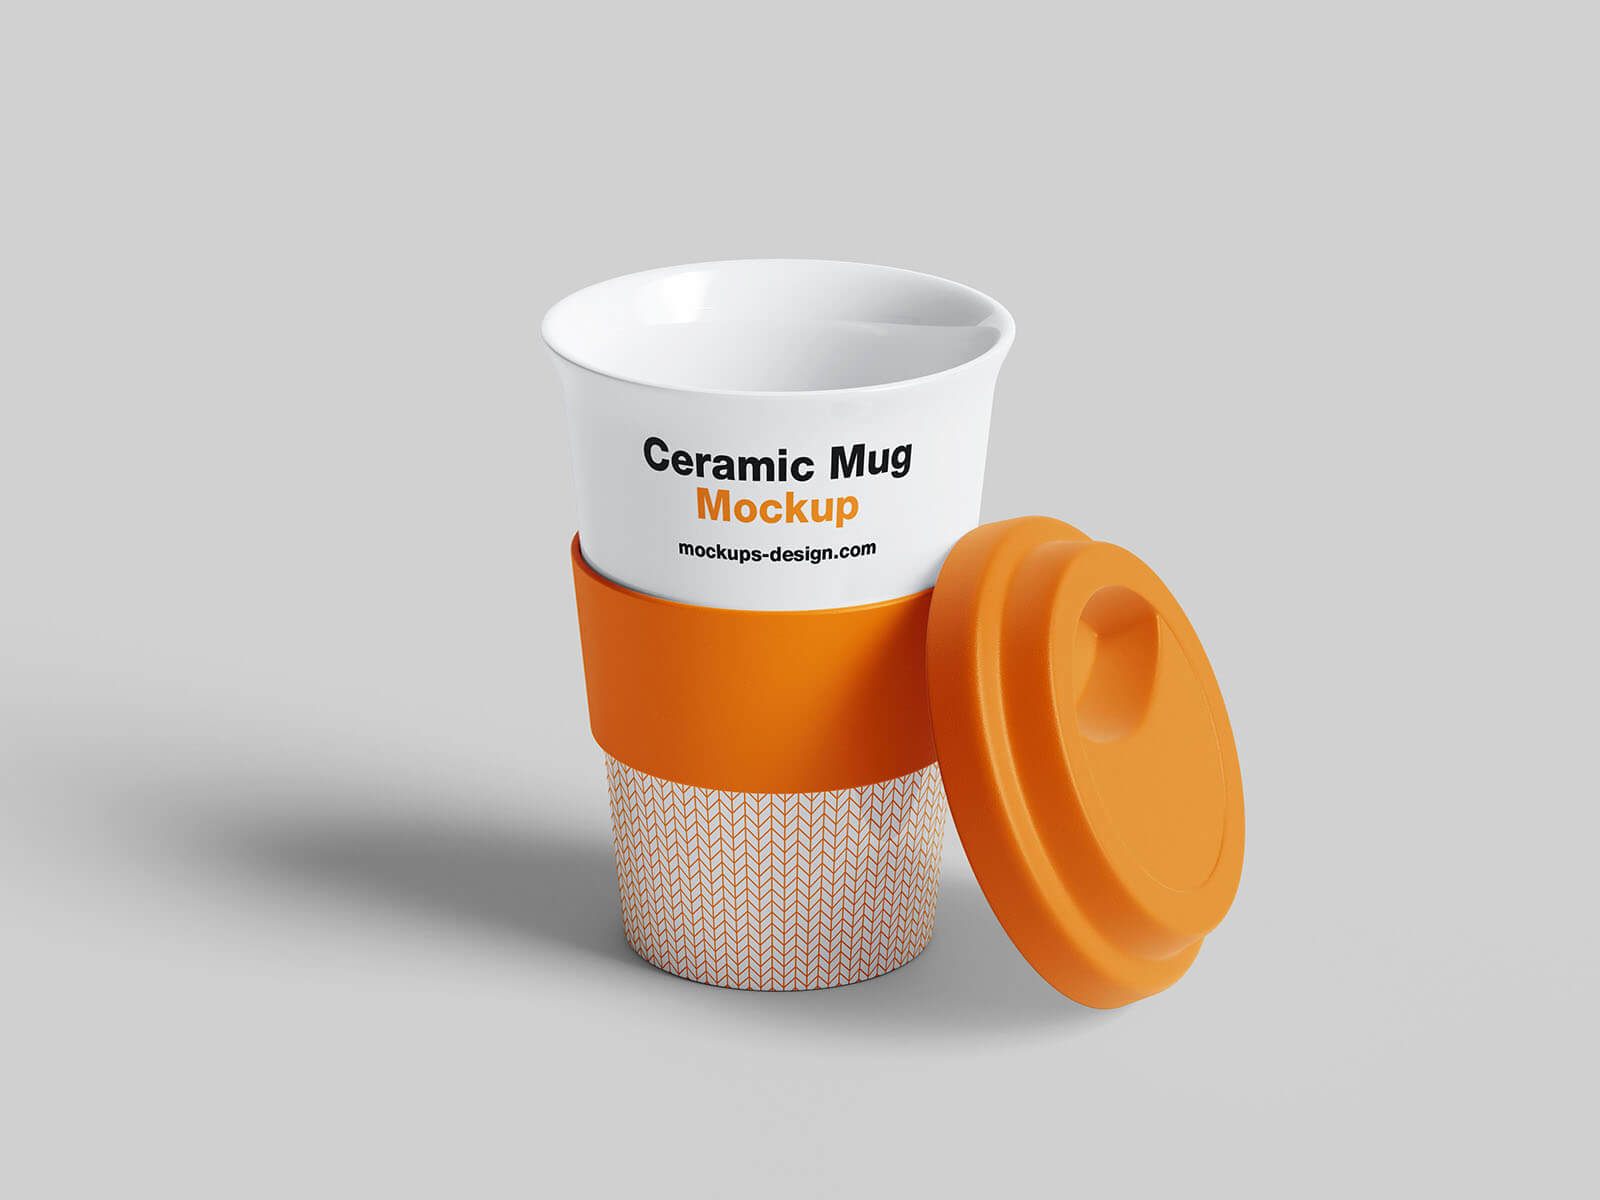 5 Free Reusable Ceramic Mug With Cap Mockup PSD Files3